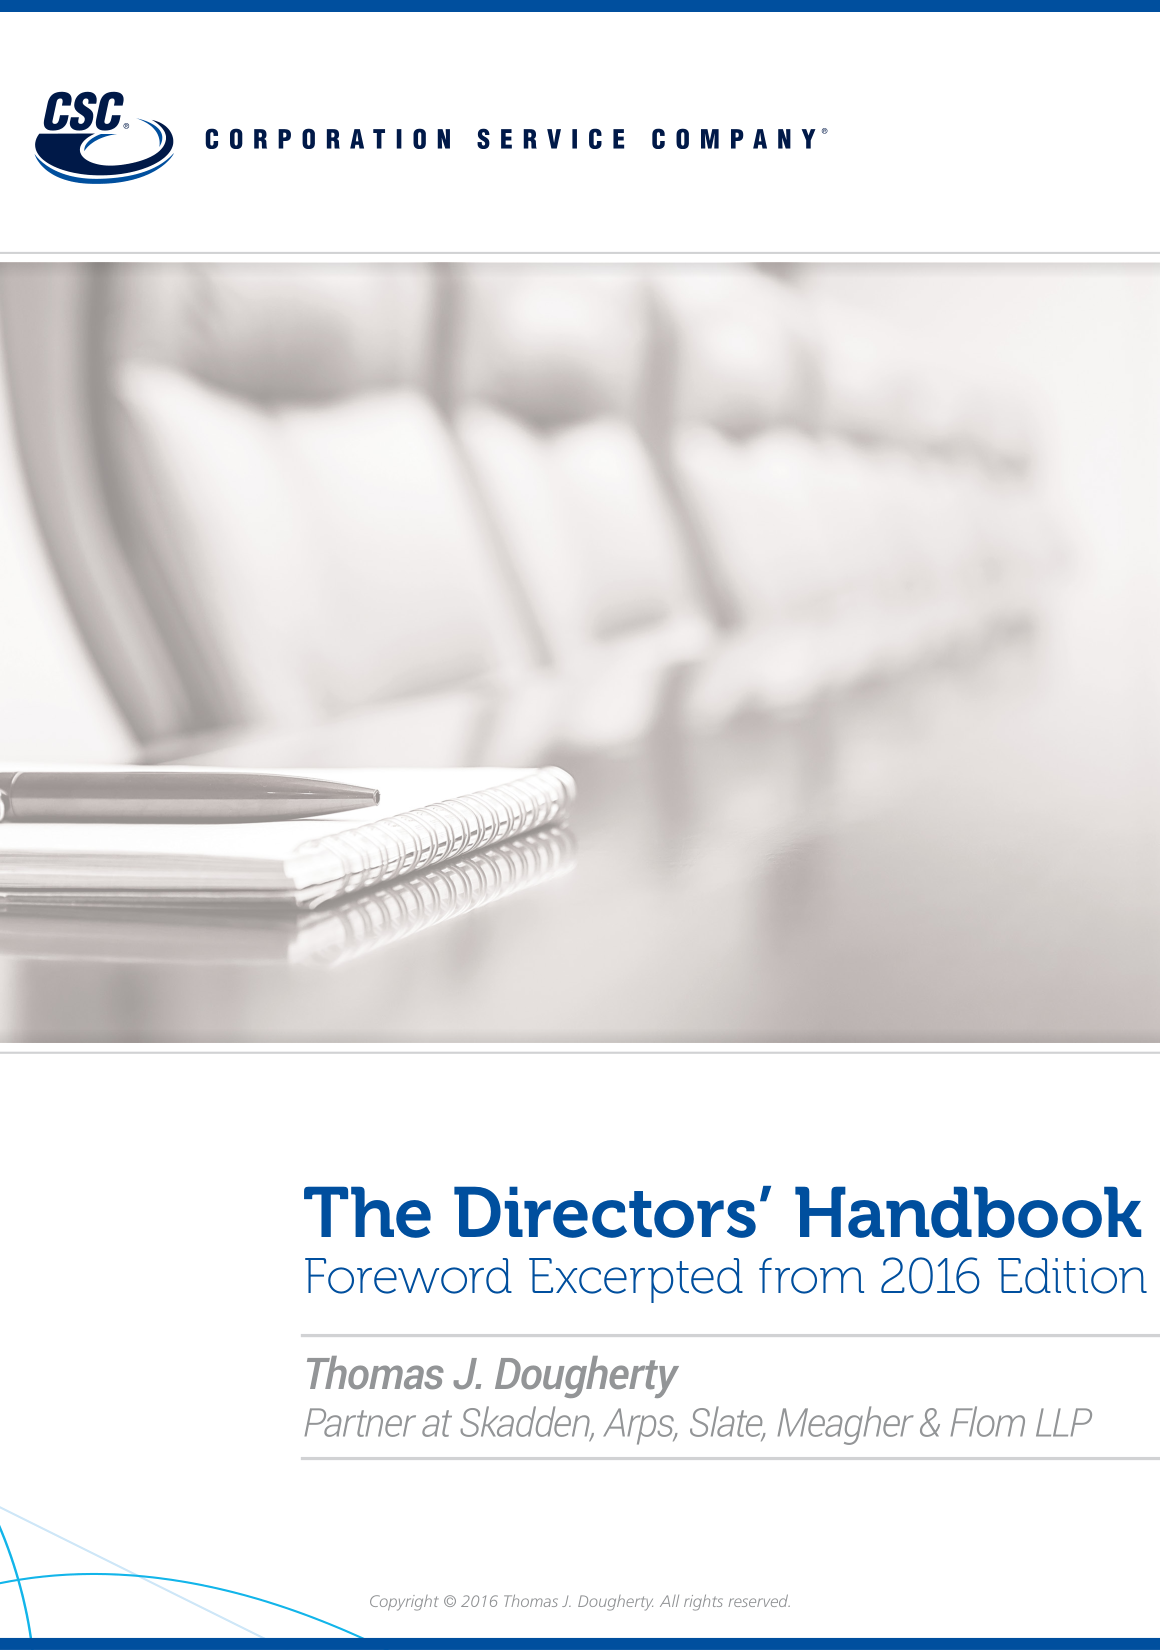 “Defending Director Discretion” excerpted from The Directors’ Handbook 2016 edition